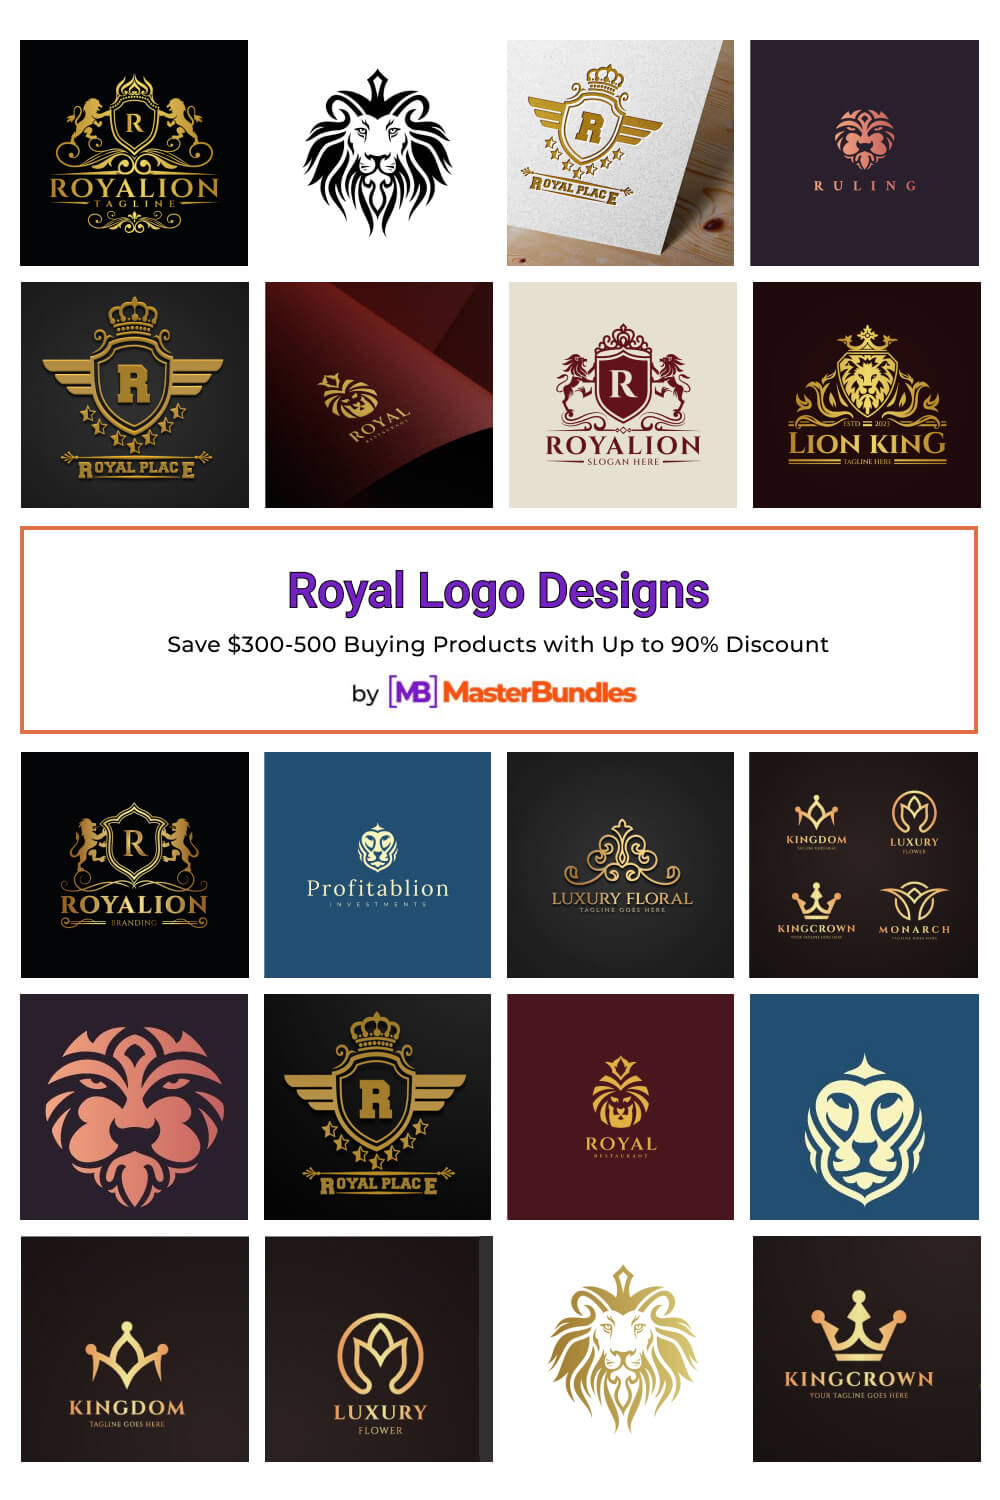 royal logo designs pinterest image.